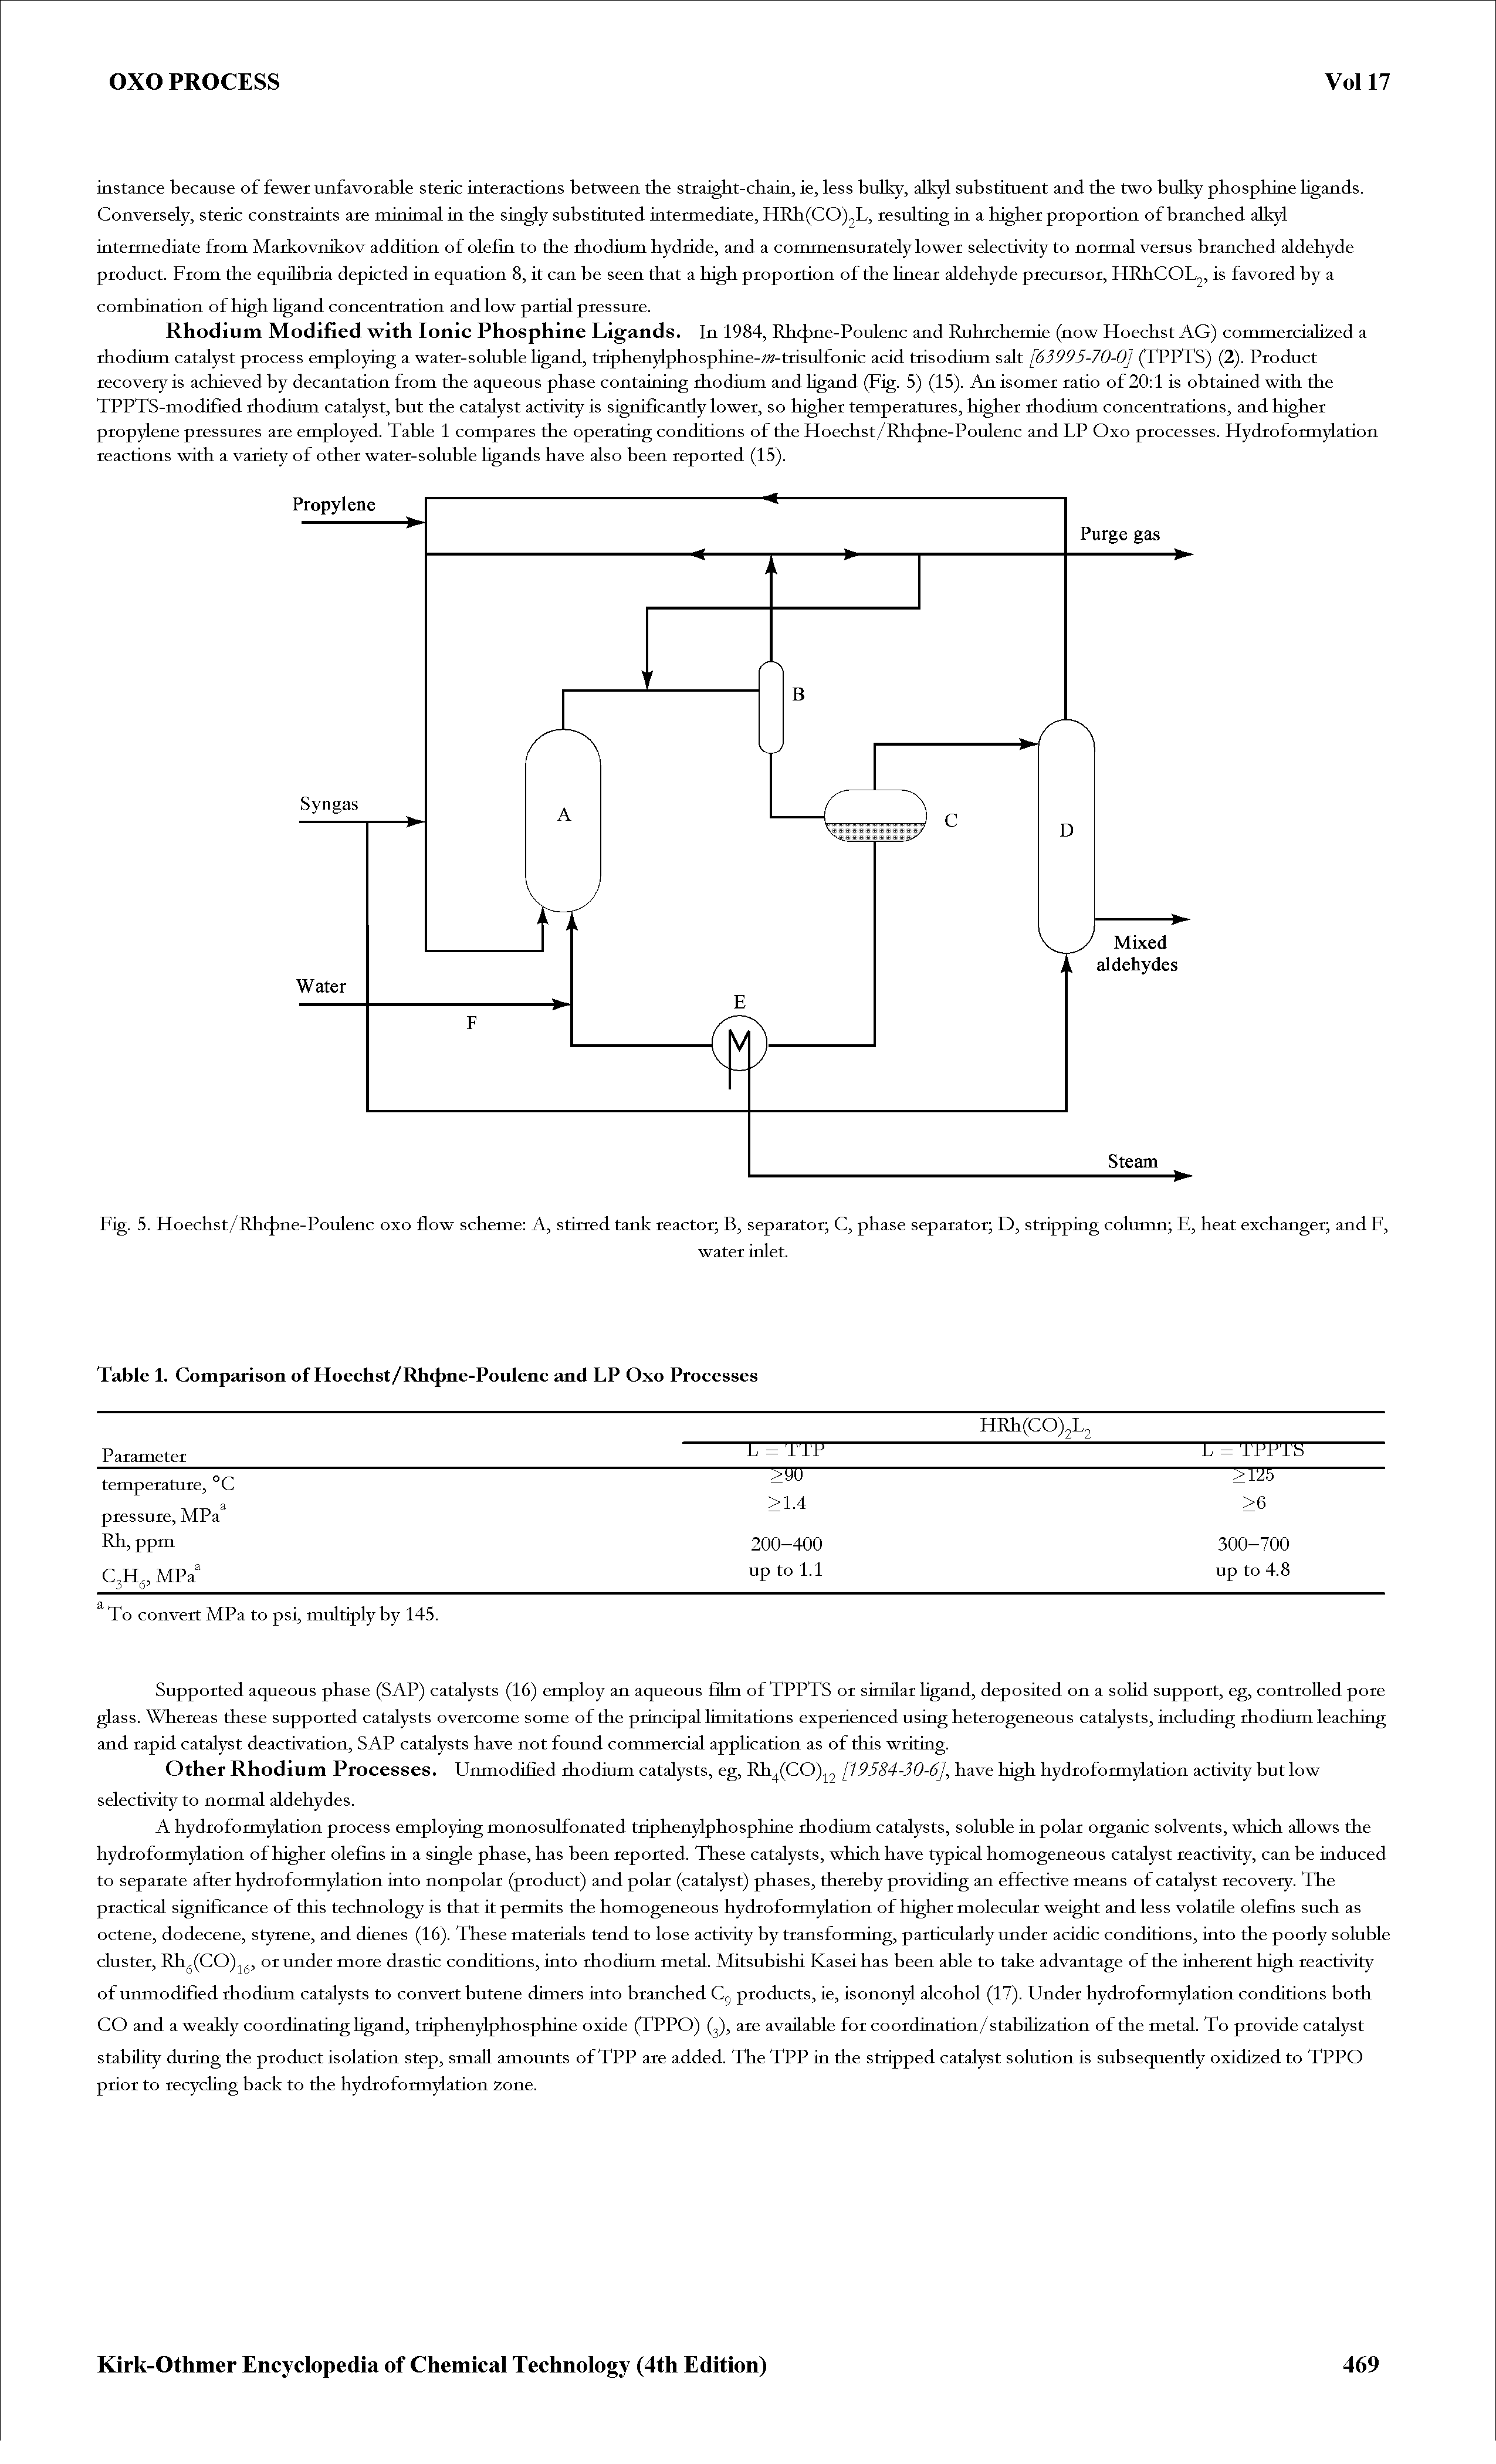 Fig. 5. Hoechst/Rhc ne-Poulenc oxo flow scheme A, stirred tank reactor B, separator C, phase separator D, stripping column E, heat exchanger and F,...